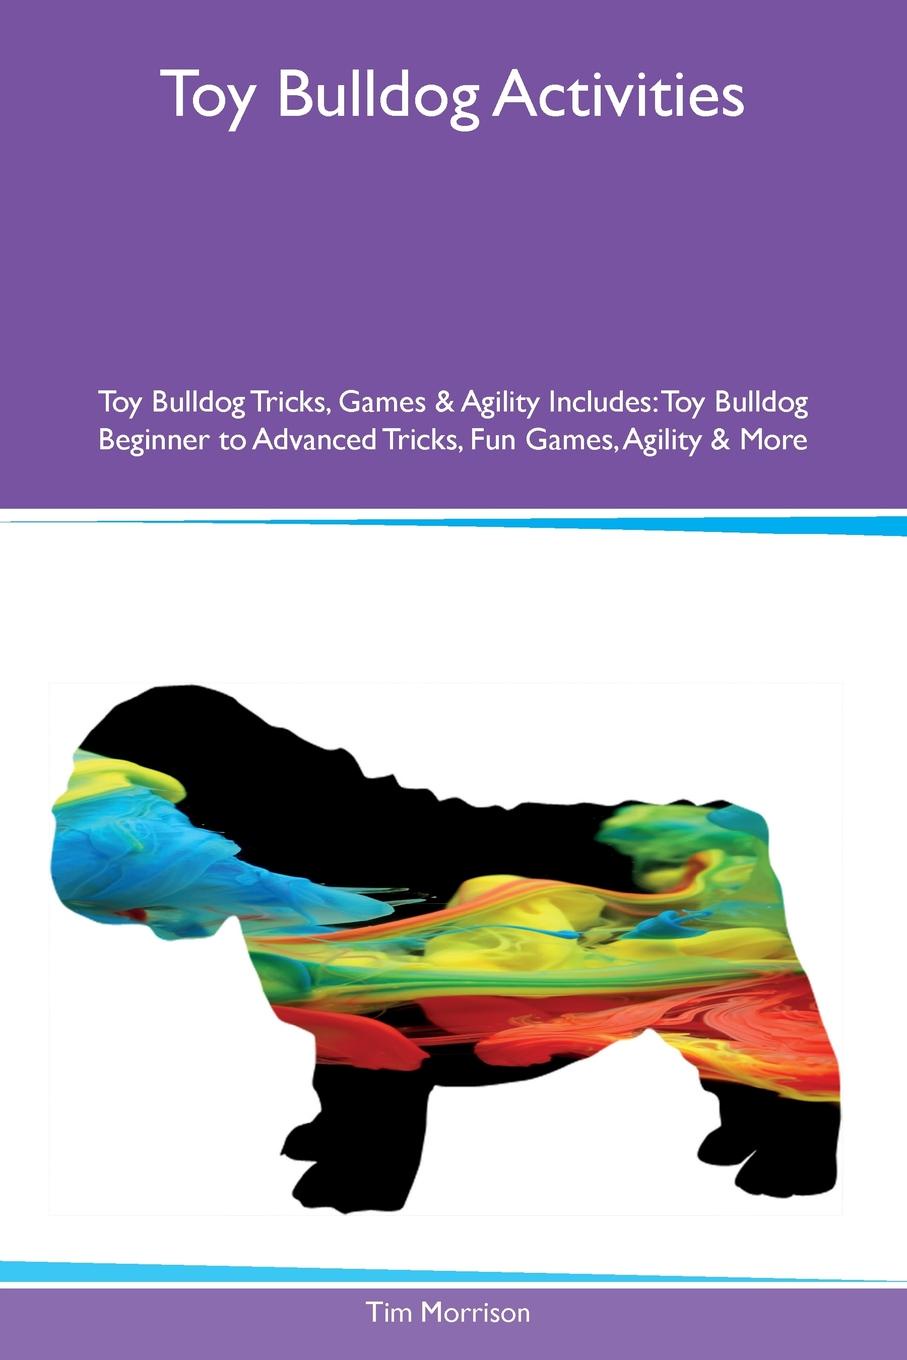 Toy Bulldog Activities Toy Bulldog Tricks, Games & Agility Includes. Toy Bulldog Beginner to Advanced Tricks, Fun Games, Agility & More